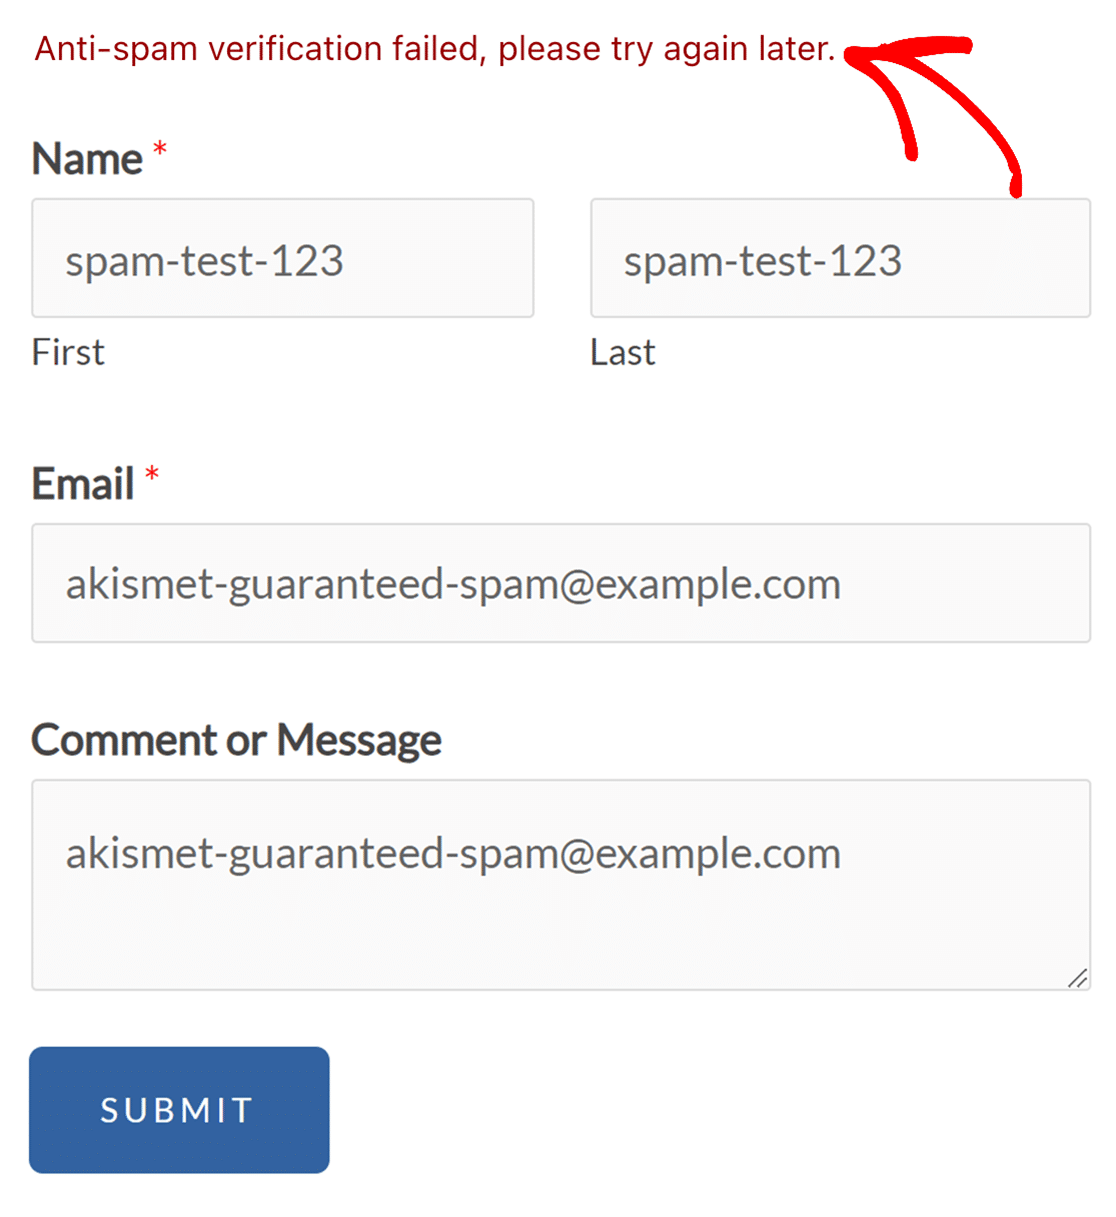 Anti spam failure notice